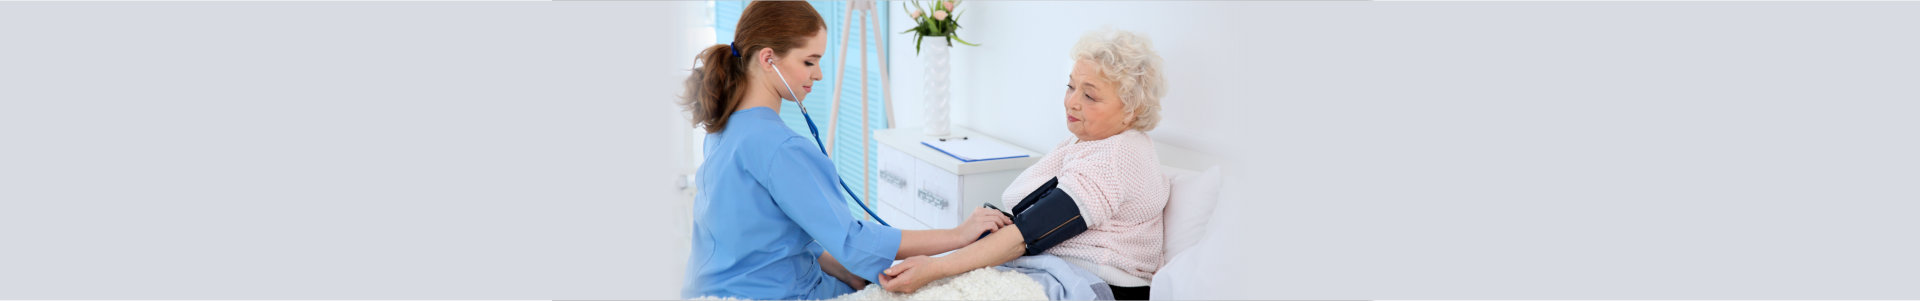 Nurse having attending an old woman